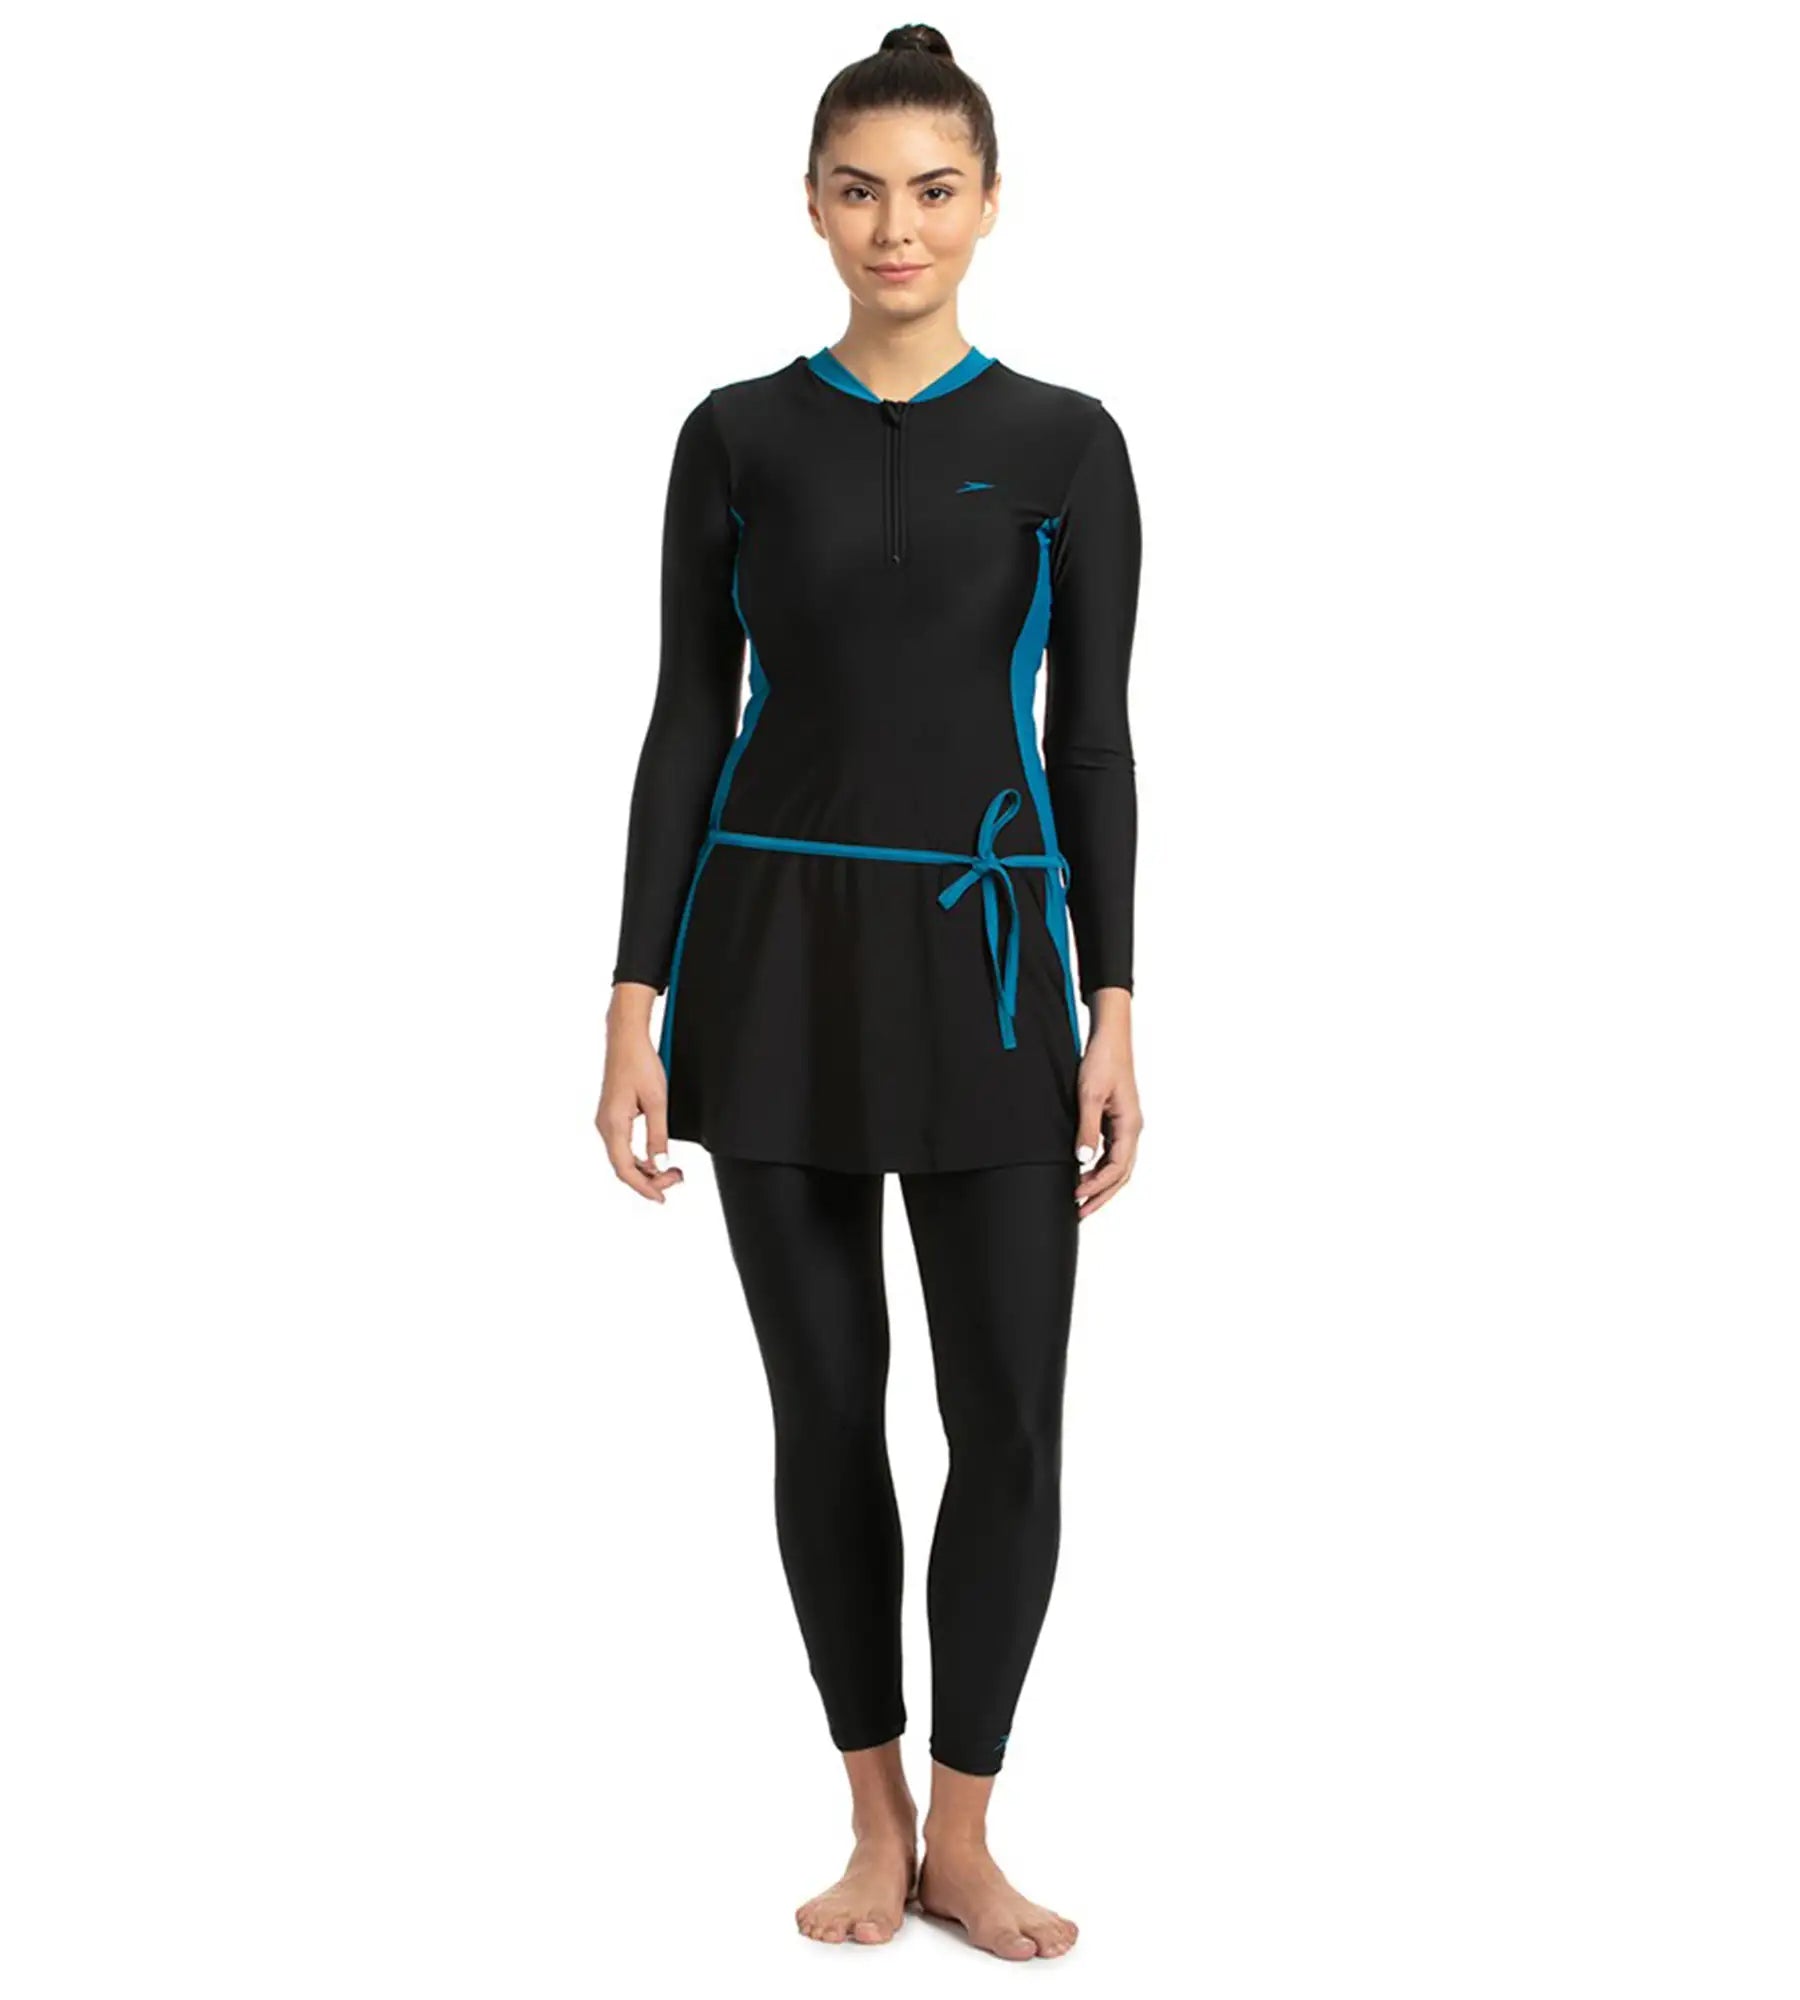 Women's Endurance 10 Two Piece Full Body Suit Swimwear - Black & Nordic Teal_1